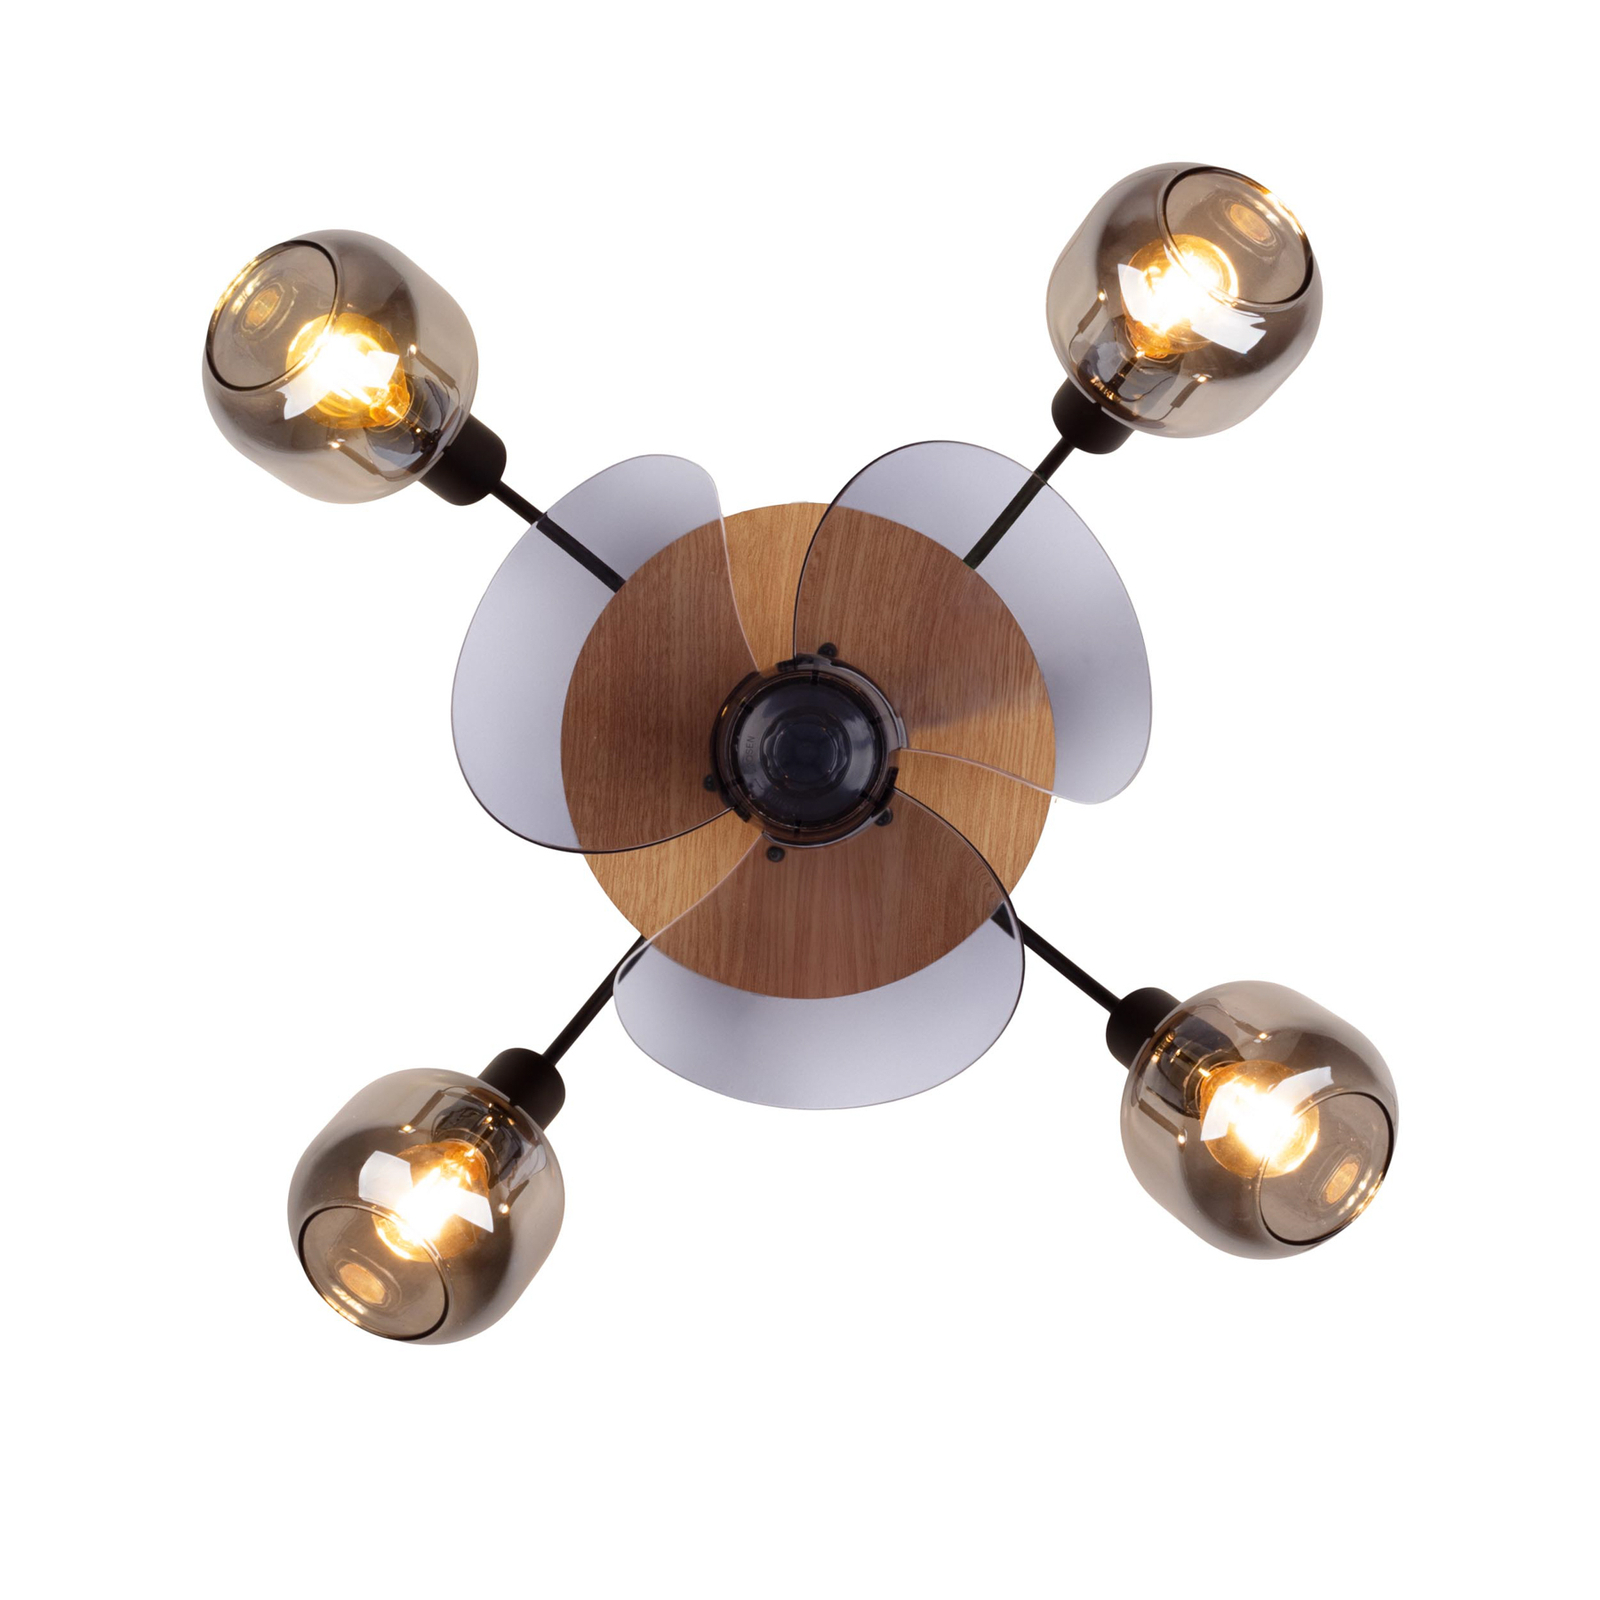 Fumoso ceiling fan, four E14 smoked glass lights